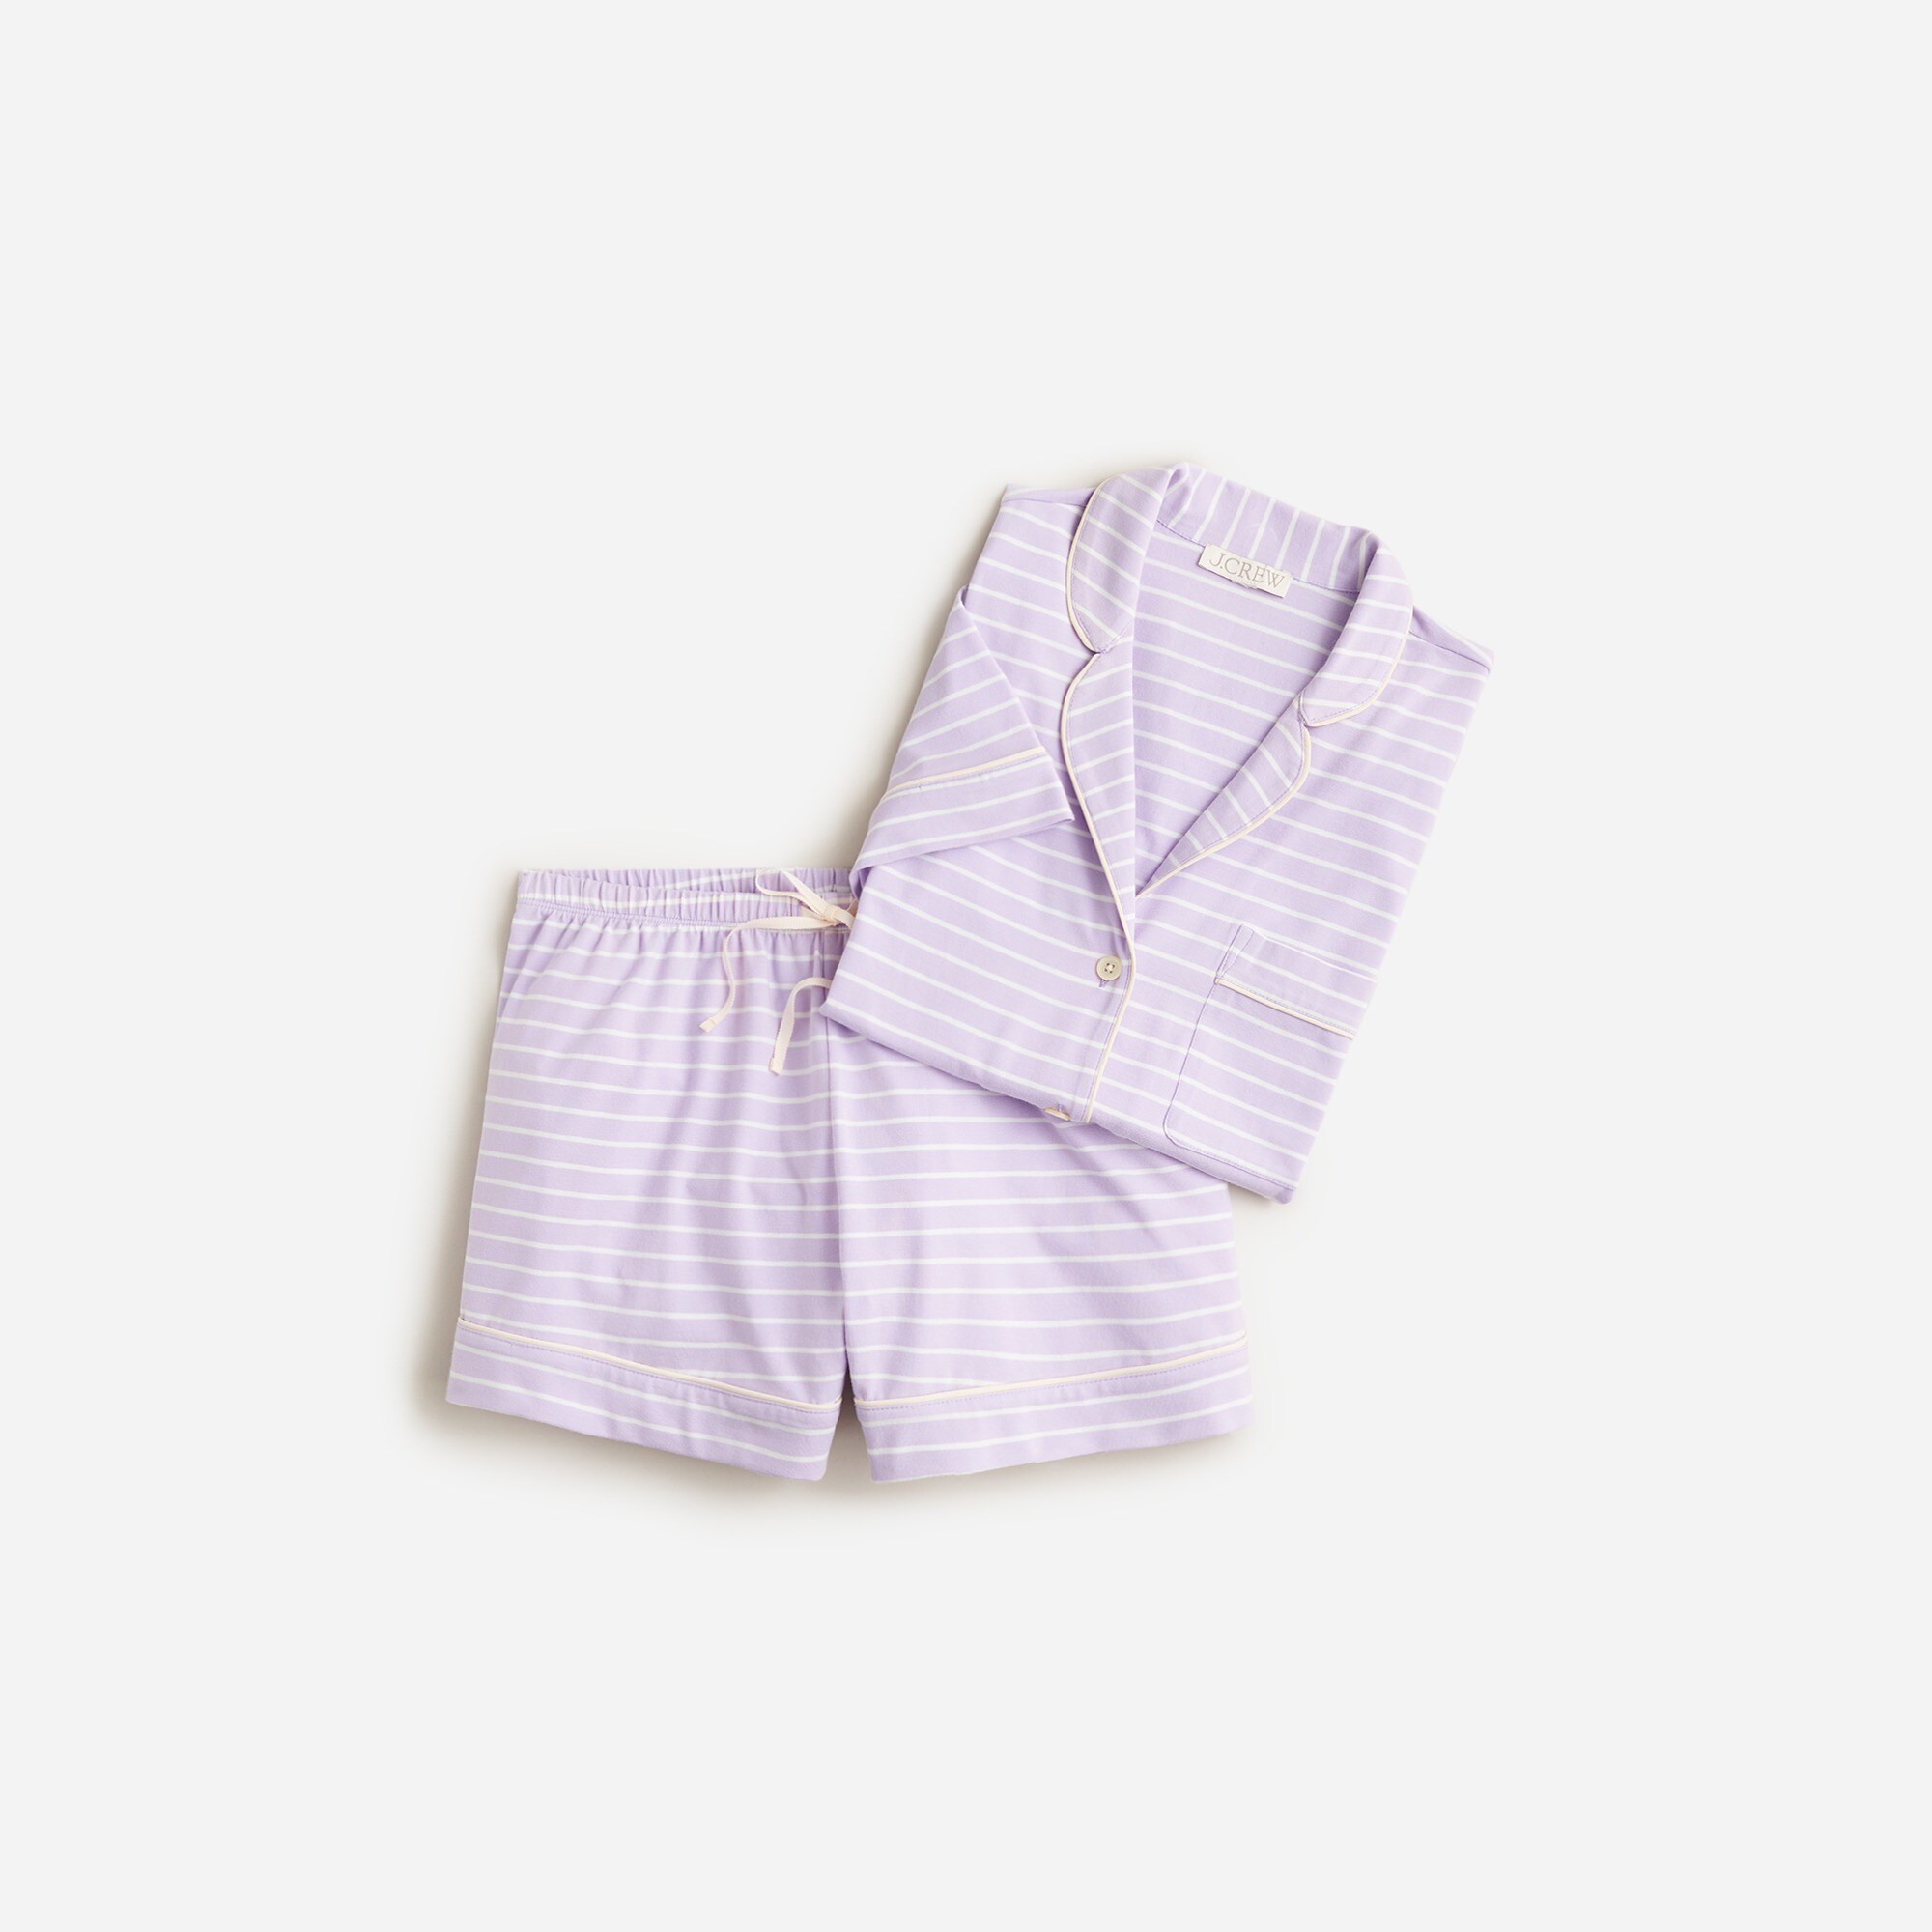 womens Short-sleeve pajama short set in stripe dreamy cotton blend